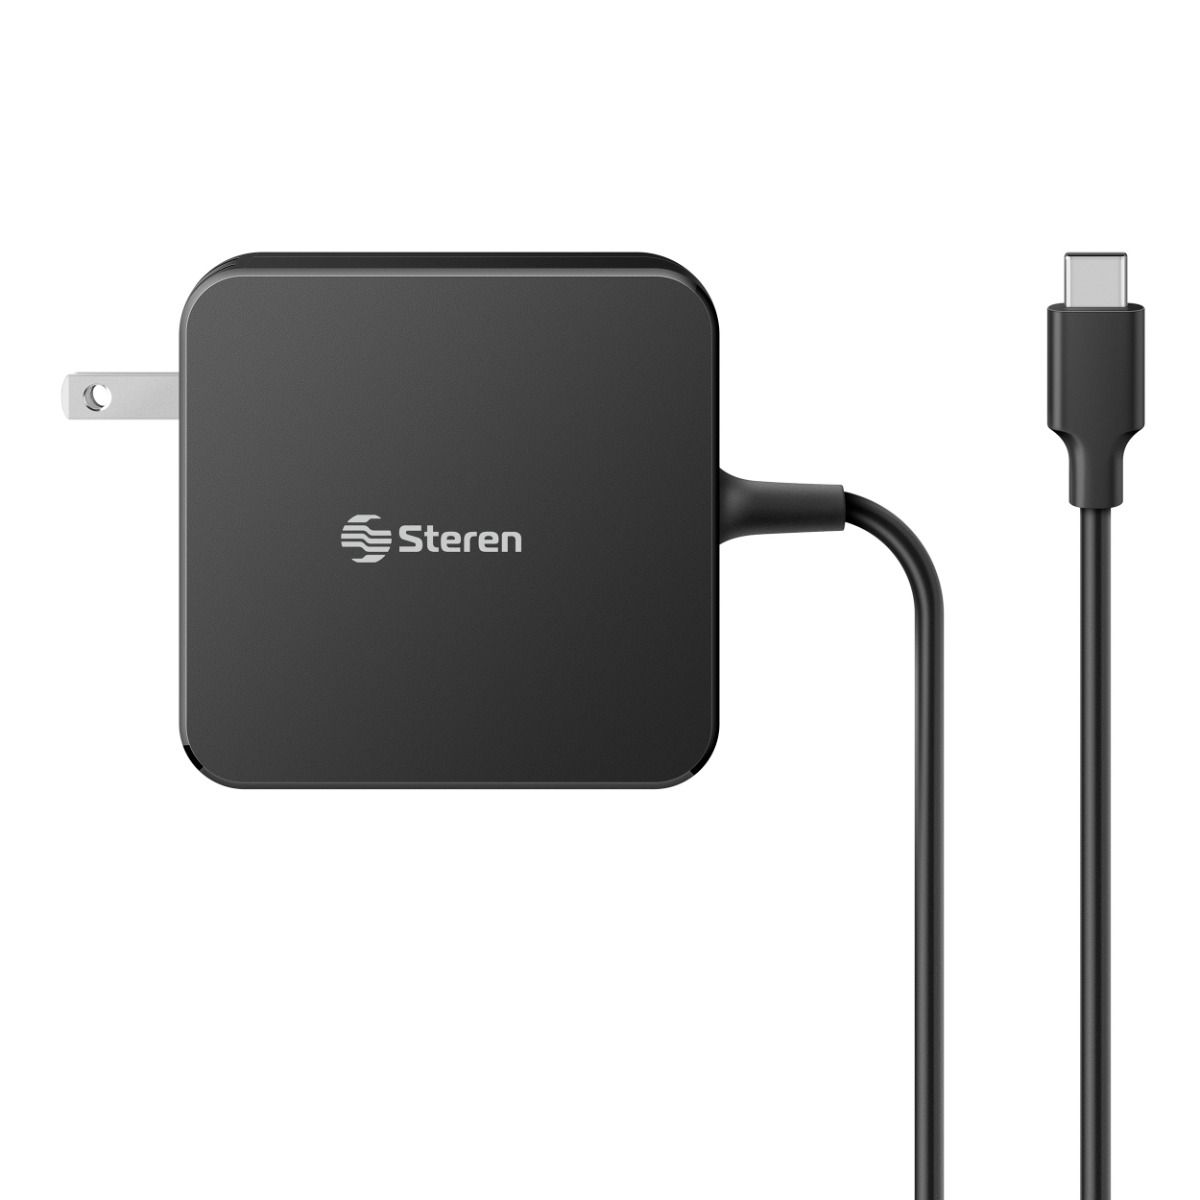 Ratón inalámbrico Bluetooth USB C para iPad/MacBook Air, Caja